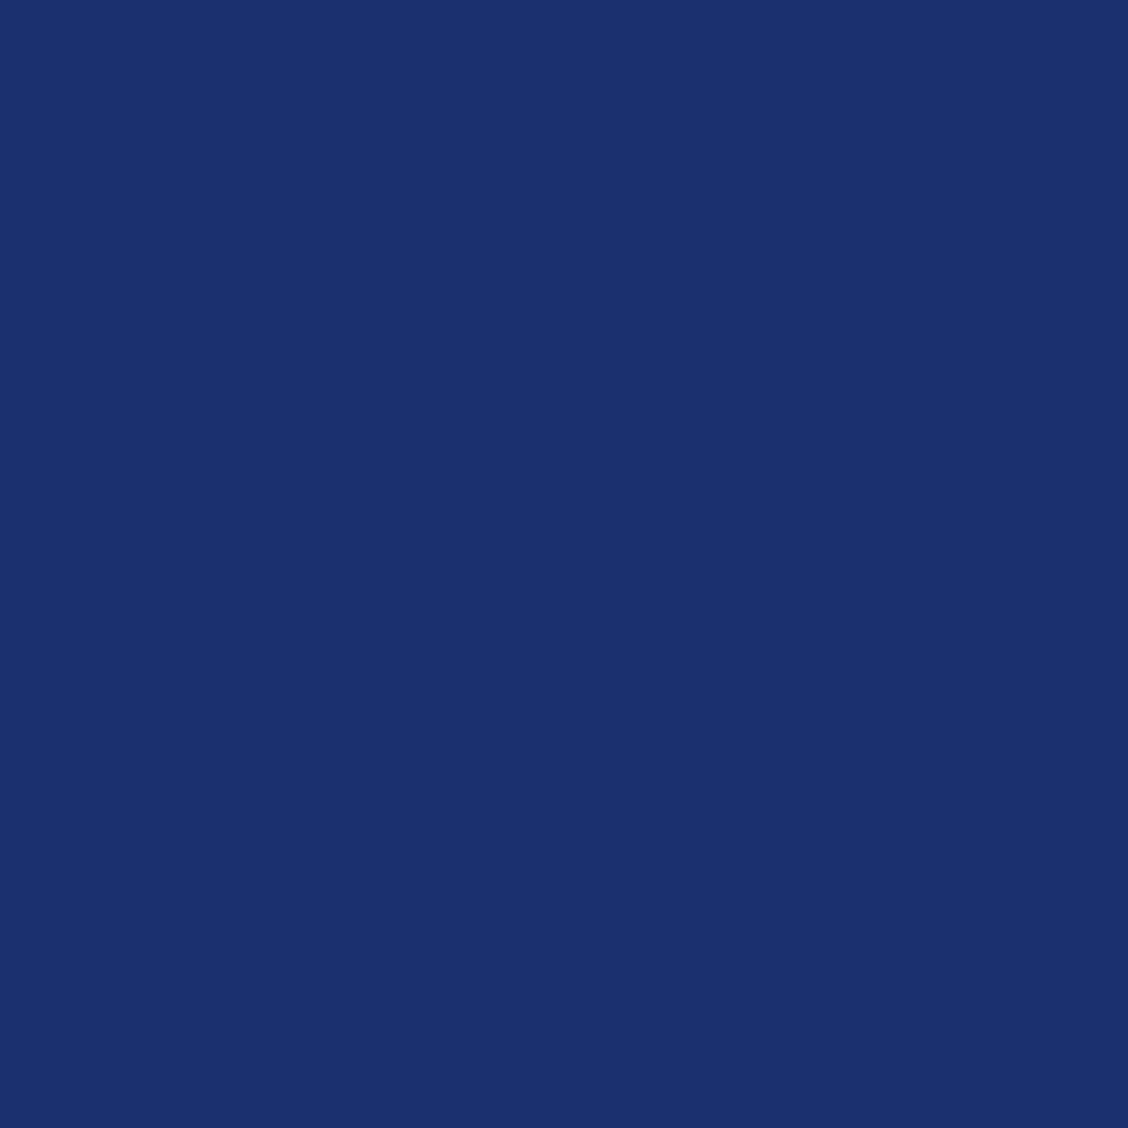 Hamburger Lack-Profi Lacke & Beschichtungen Hamburger Lack-Profi Schwimmbeckenfarbe Enzianblau RAL 5010 - hochdeckende Poolfarbe